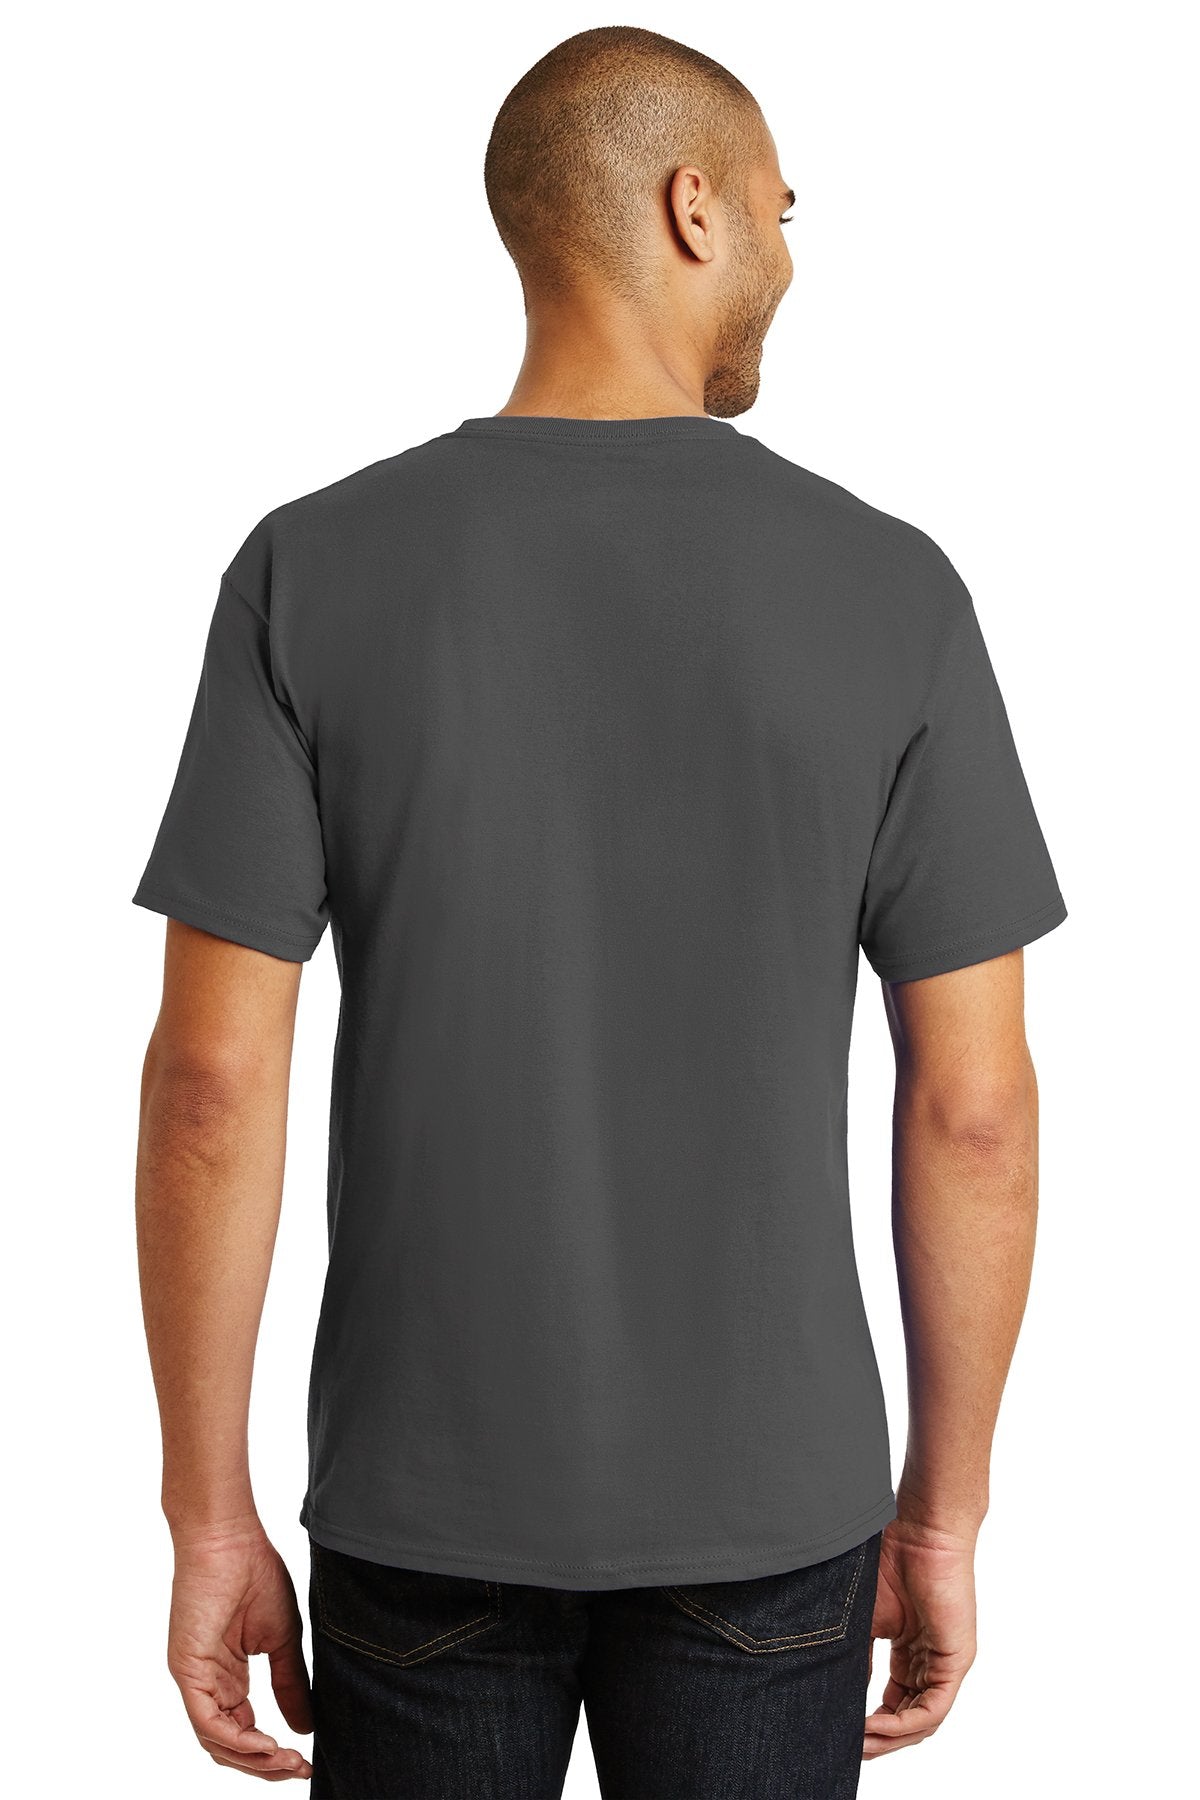 hanes tagless cotton t shirt 5250 smoke grey